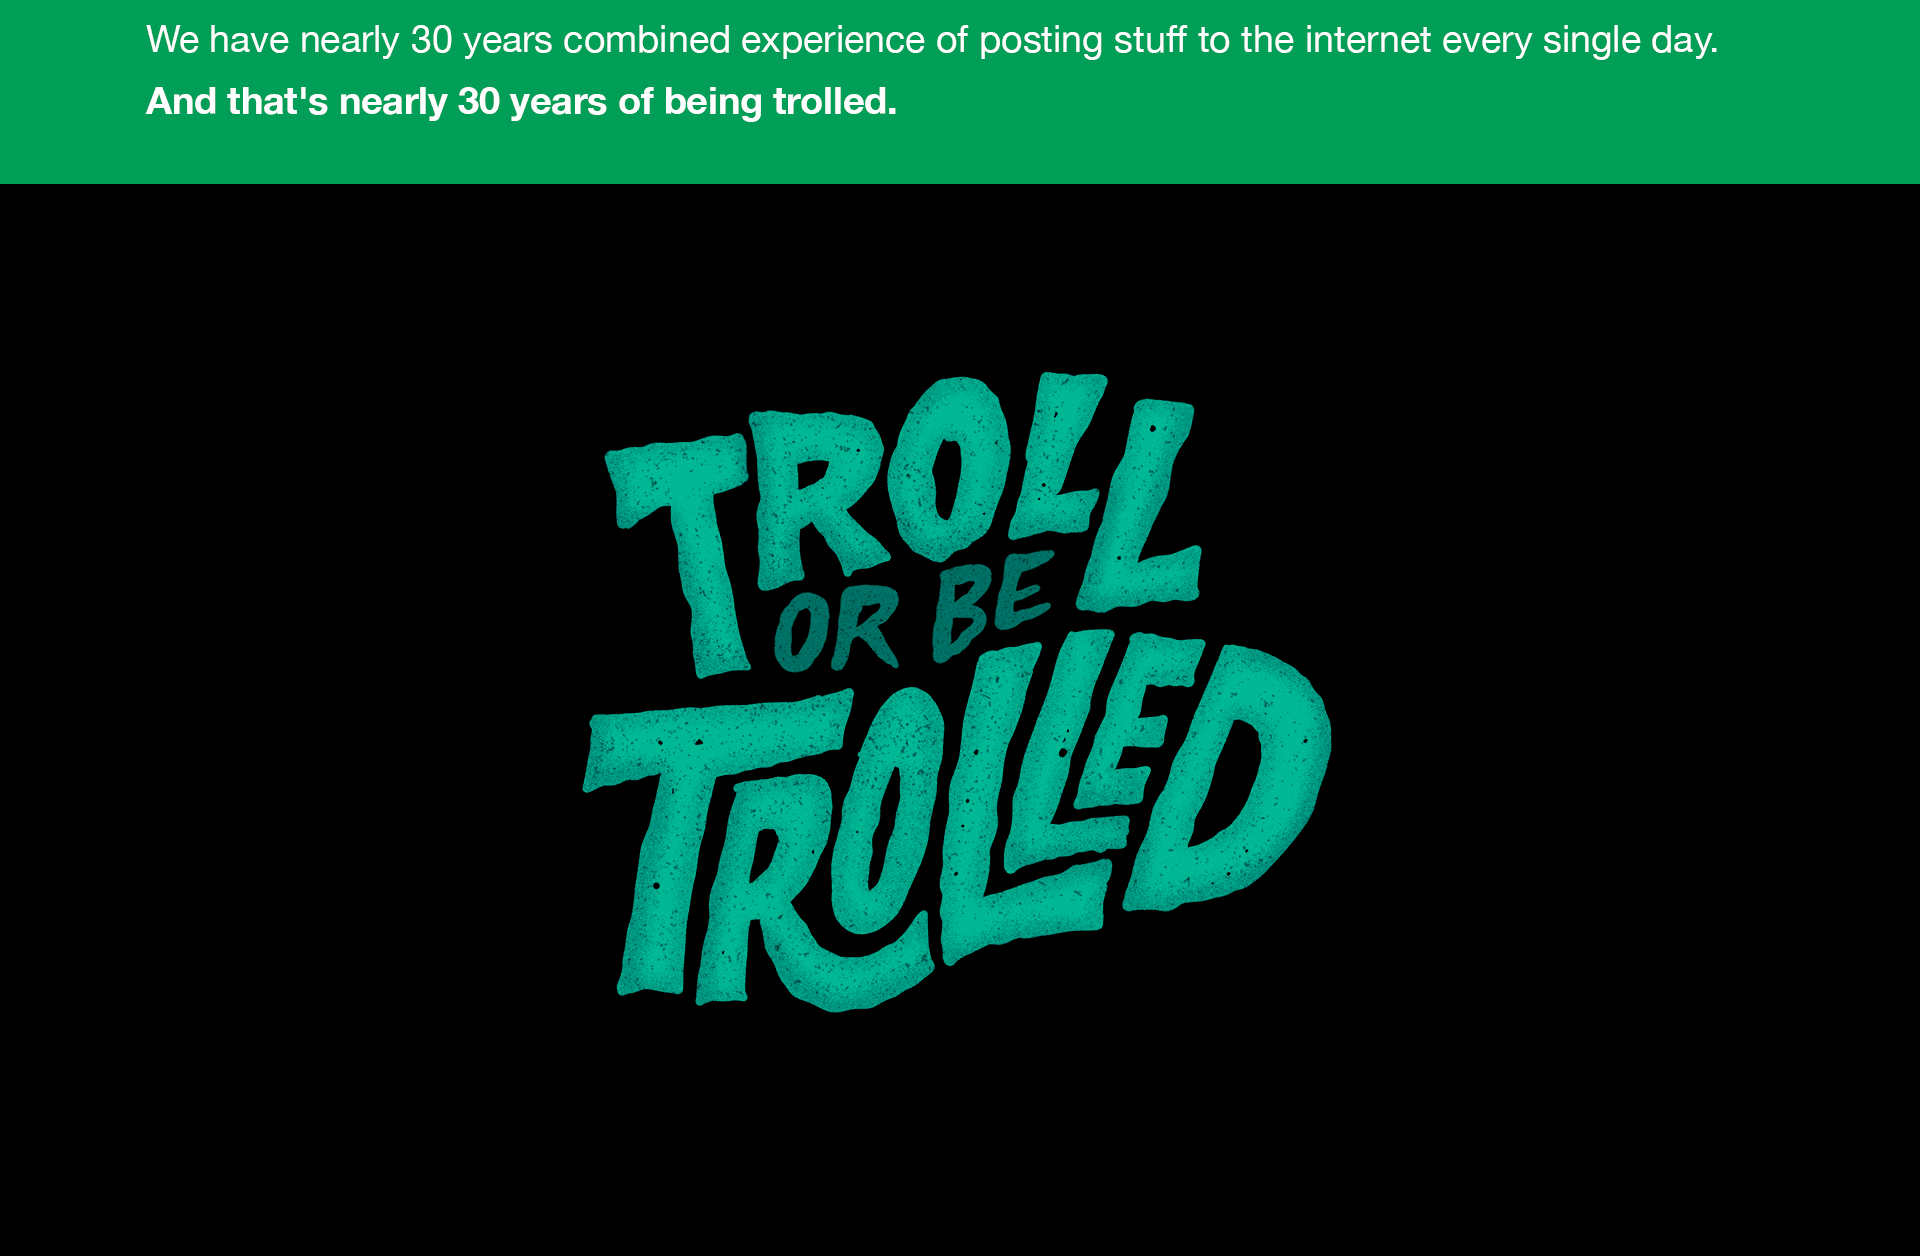 it's a troll or be trolled world